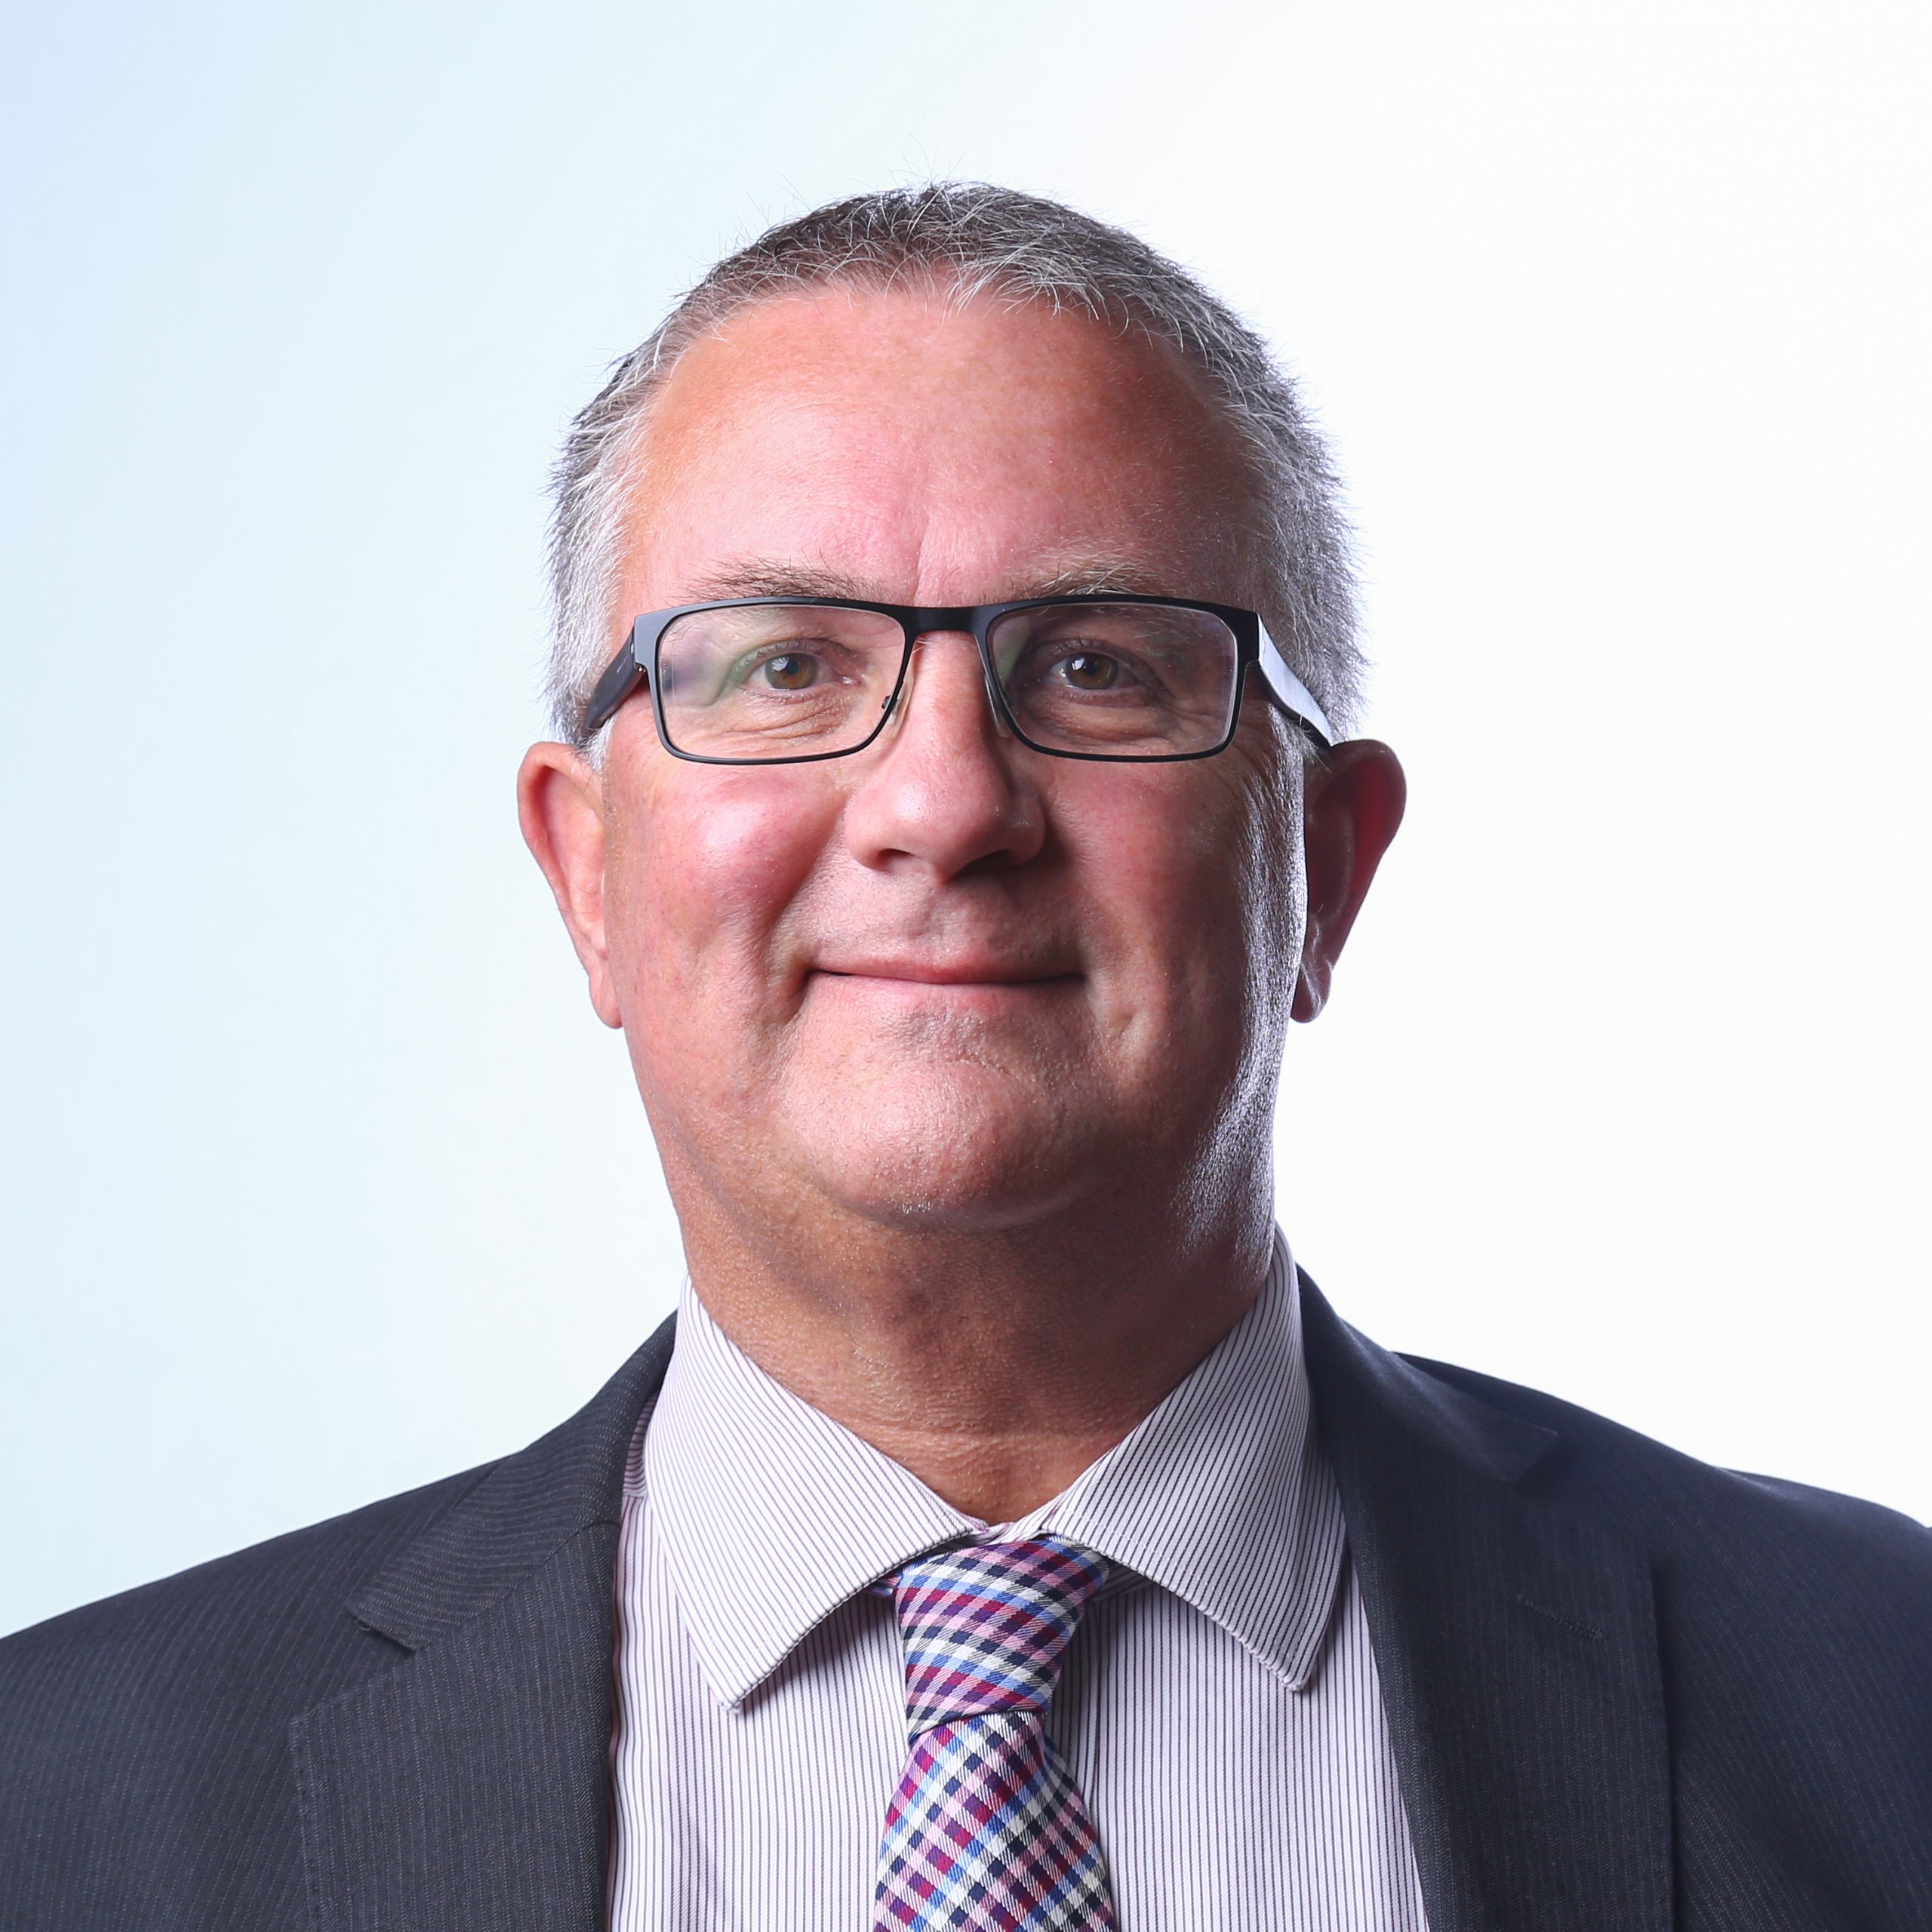 Fairstone financial adviser Nick Gilliam